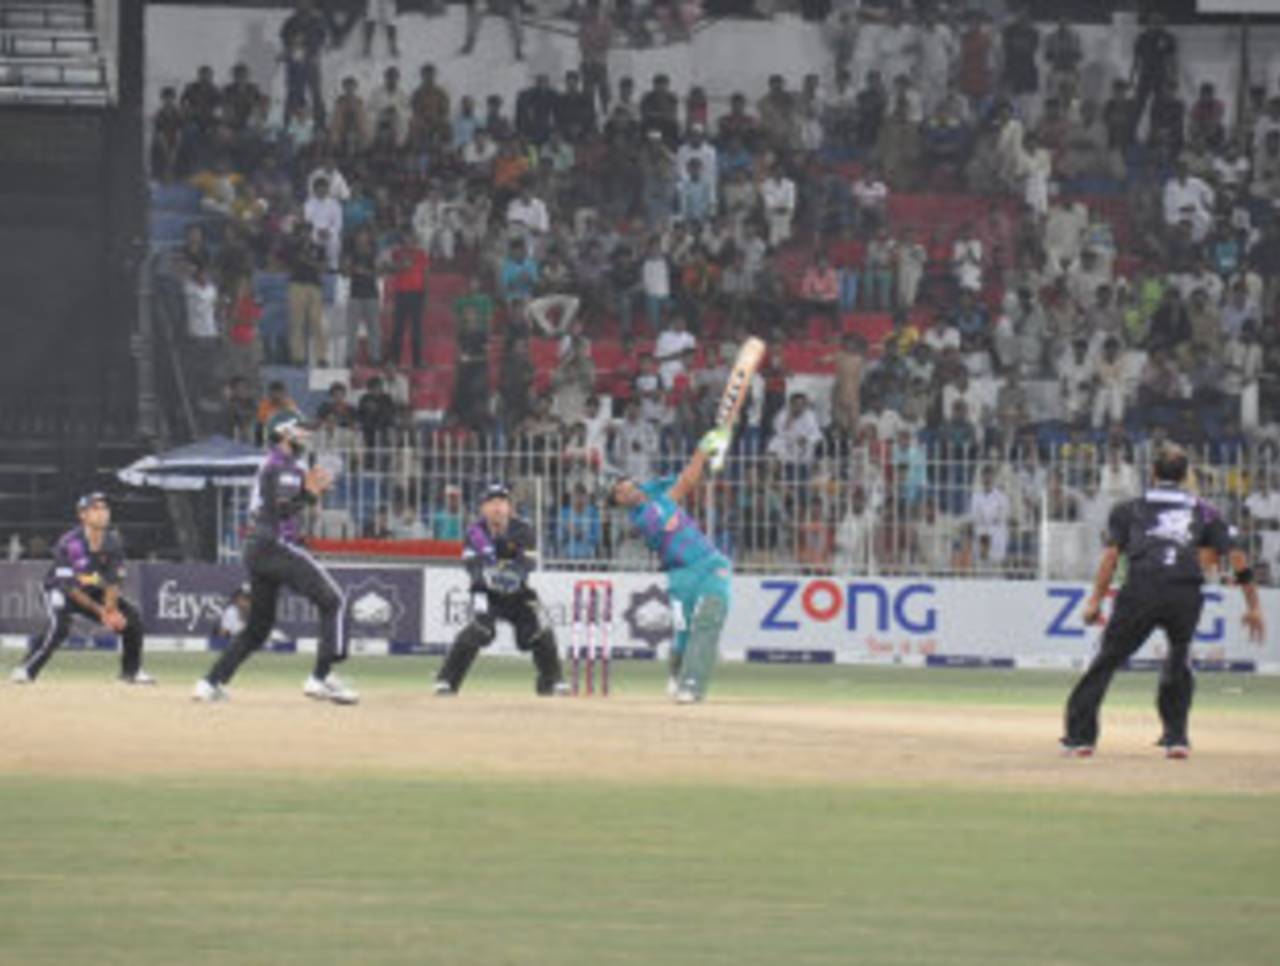 Jamal Anwar hit the winning six as Rawalpindi beat Faisalabad in the day's second match&nbsp;&nbsp;&bull;&nbsp;&nbsp;Dr Naeem Ashraf